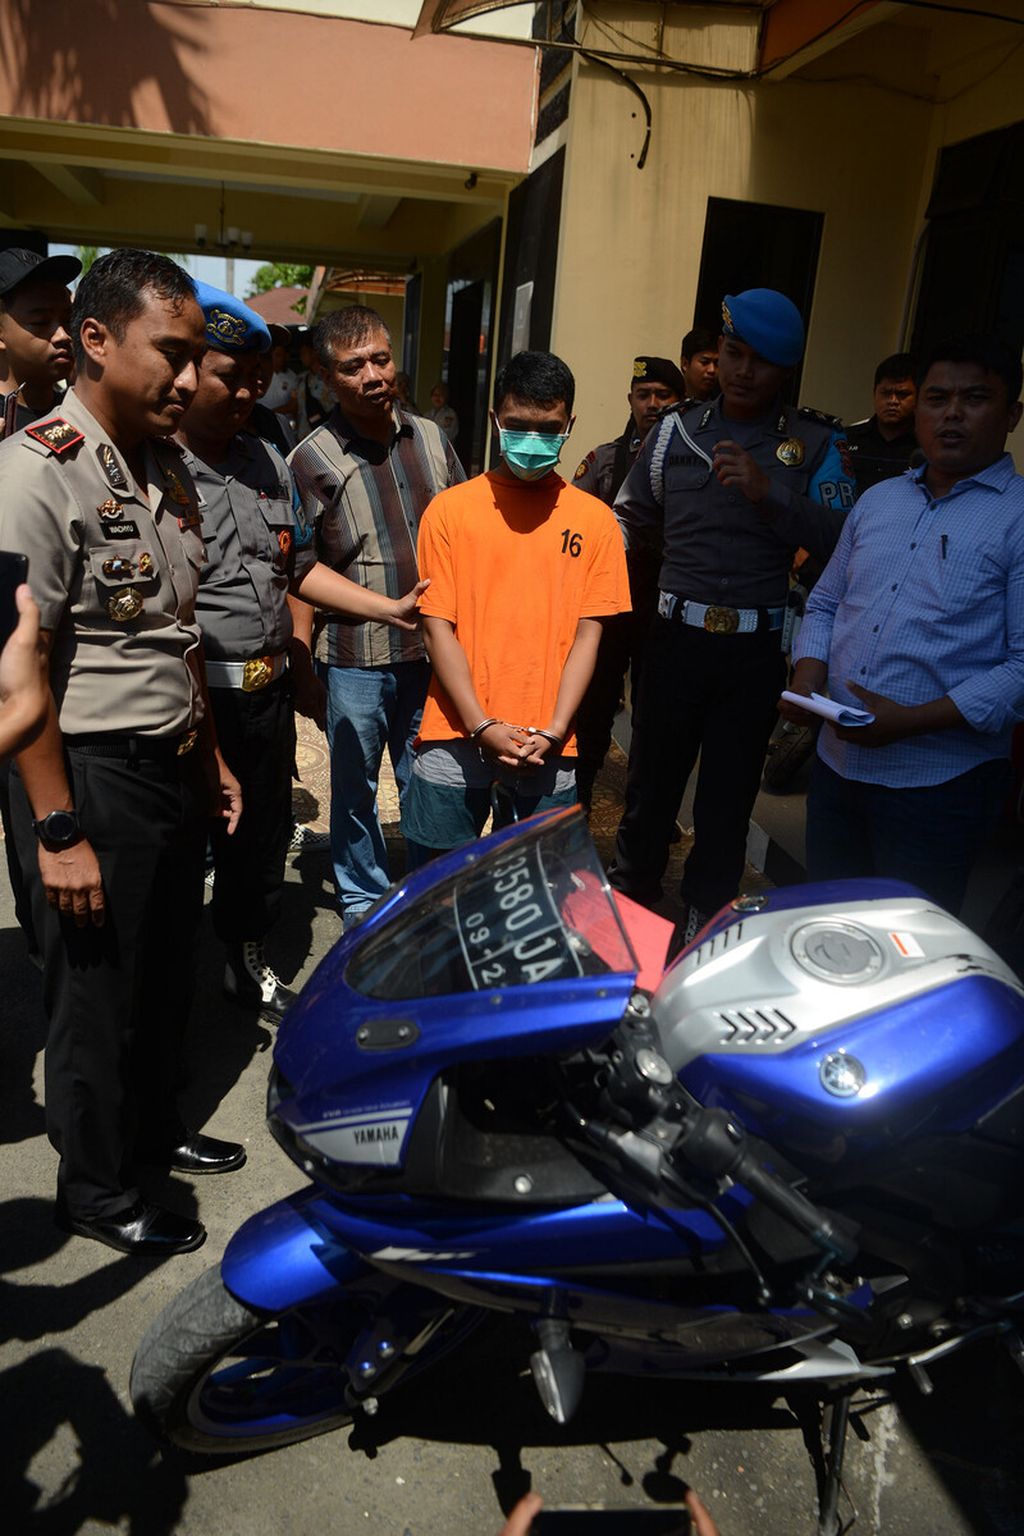 Kapolres Bantul AKBP Wachyu Tri Budi Sulistiyono (kiri) menunjukkan sepeda motor yang dikendarai korban dan para pelaku kasus kejahatan jalanan 'klithih' dalam kegiatan jumpa pers di Markas Polres Bantul, Bantul, DI Yogyakarta, Selasa (14/1/2020). Sebanyak satu tersangka berinisial APS (18, berbaju oranye) dan 11 terduga pelaku yang seluruhnya merupakan pelajar dihadirkan dalam acara tersebut. Peristiwa yang terjadi 14 Desember 2019 tersebut mengakibatkan satu orang pelajar yang menjadi korban meninggal dunia.KOMPAS/FERGANATA INDRA RIATMOKO